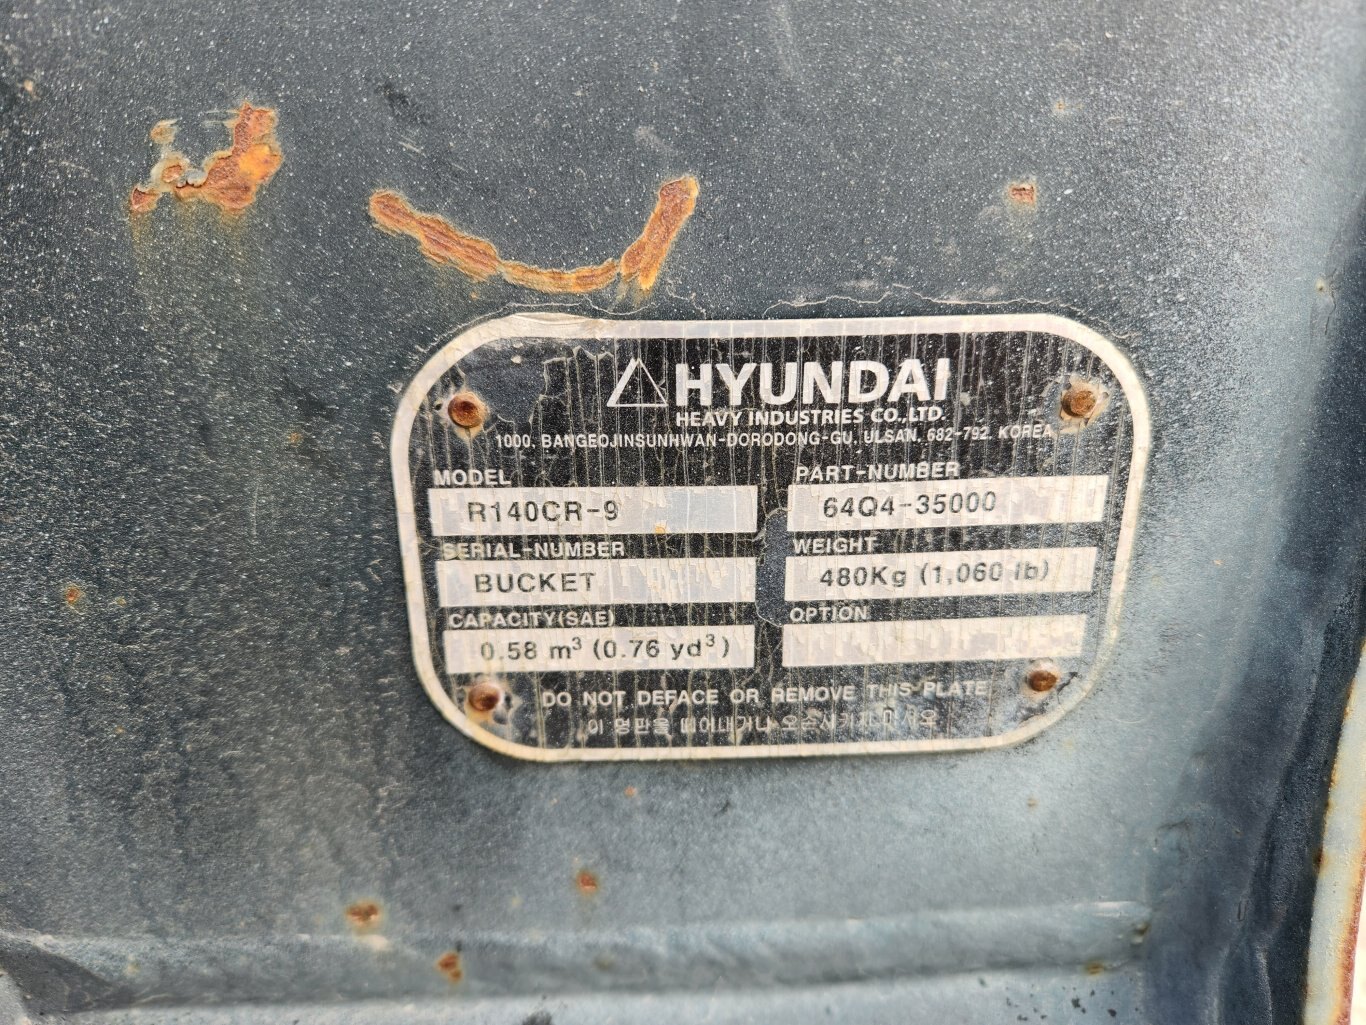 Hyundai 36 inch bucket